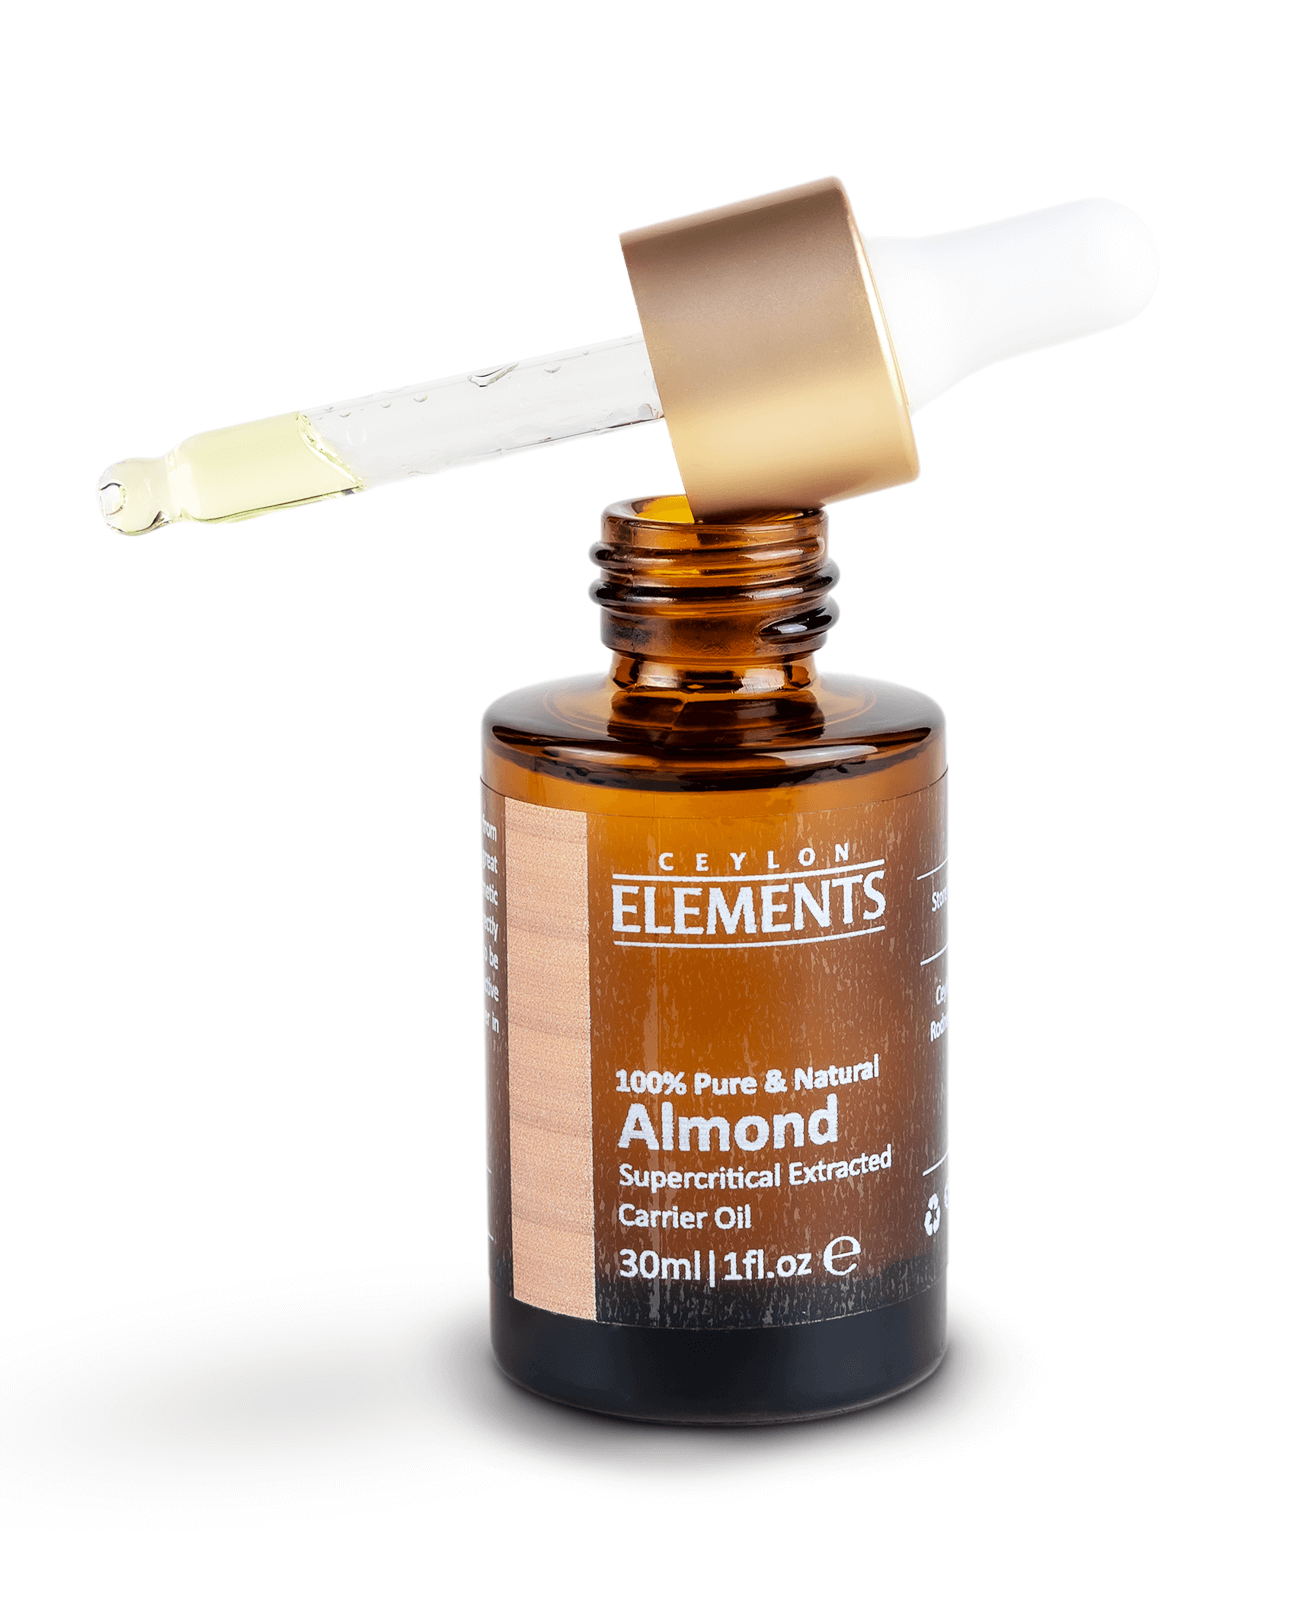 Ceylon Elements Almond Product Image 02